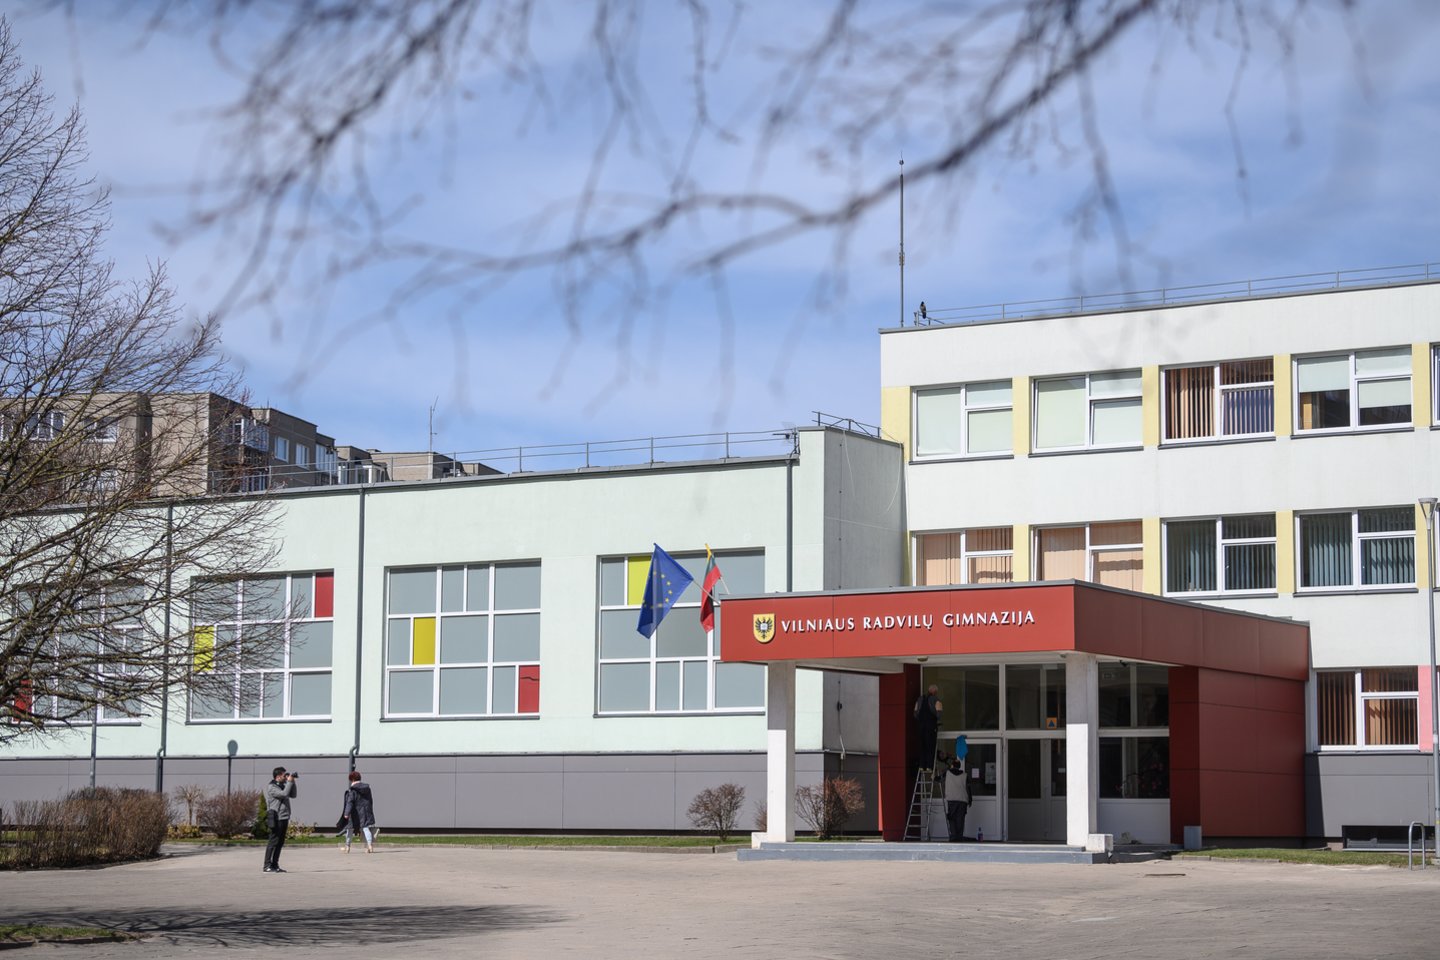  Incidentas įvyko Vilniaus Radvilų gimnazijoje.<br> V.Skaraičio nuotr.